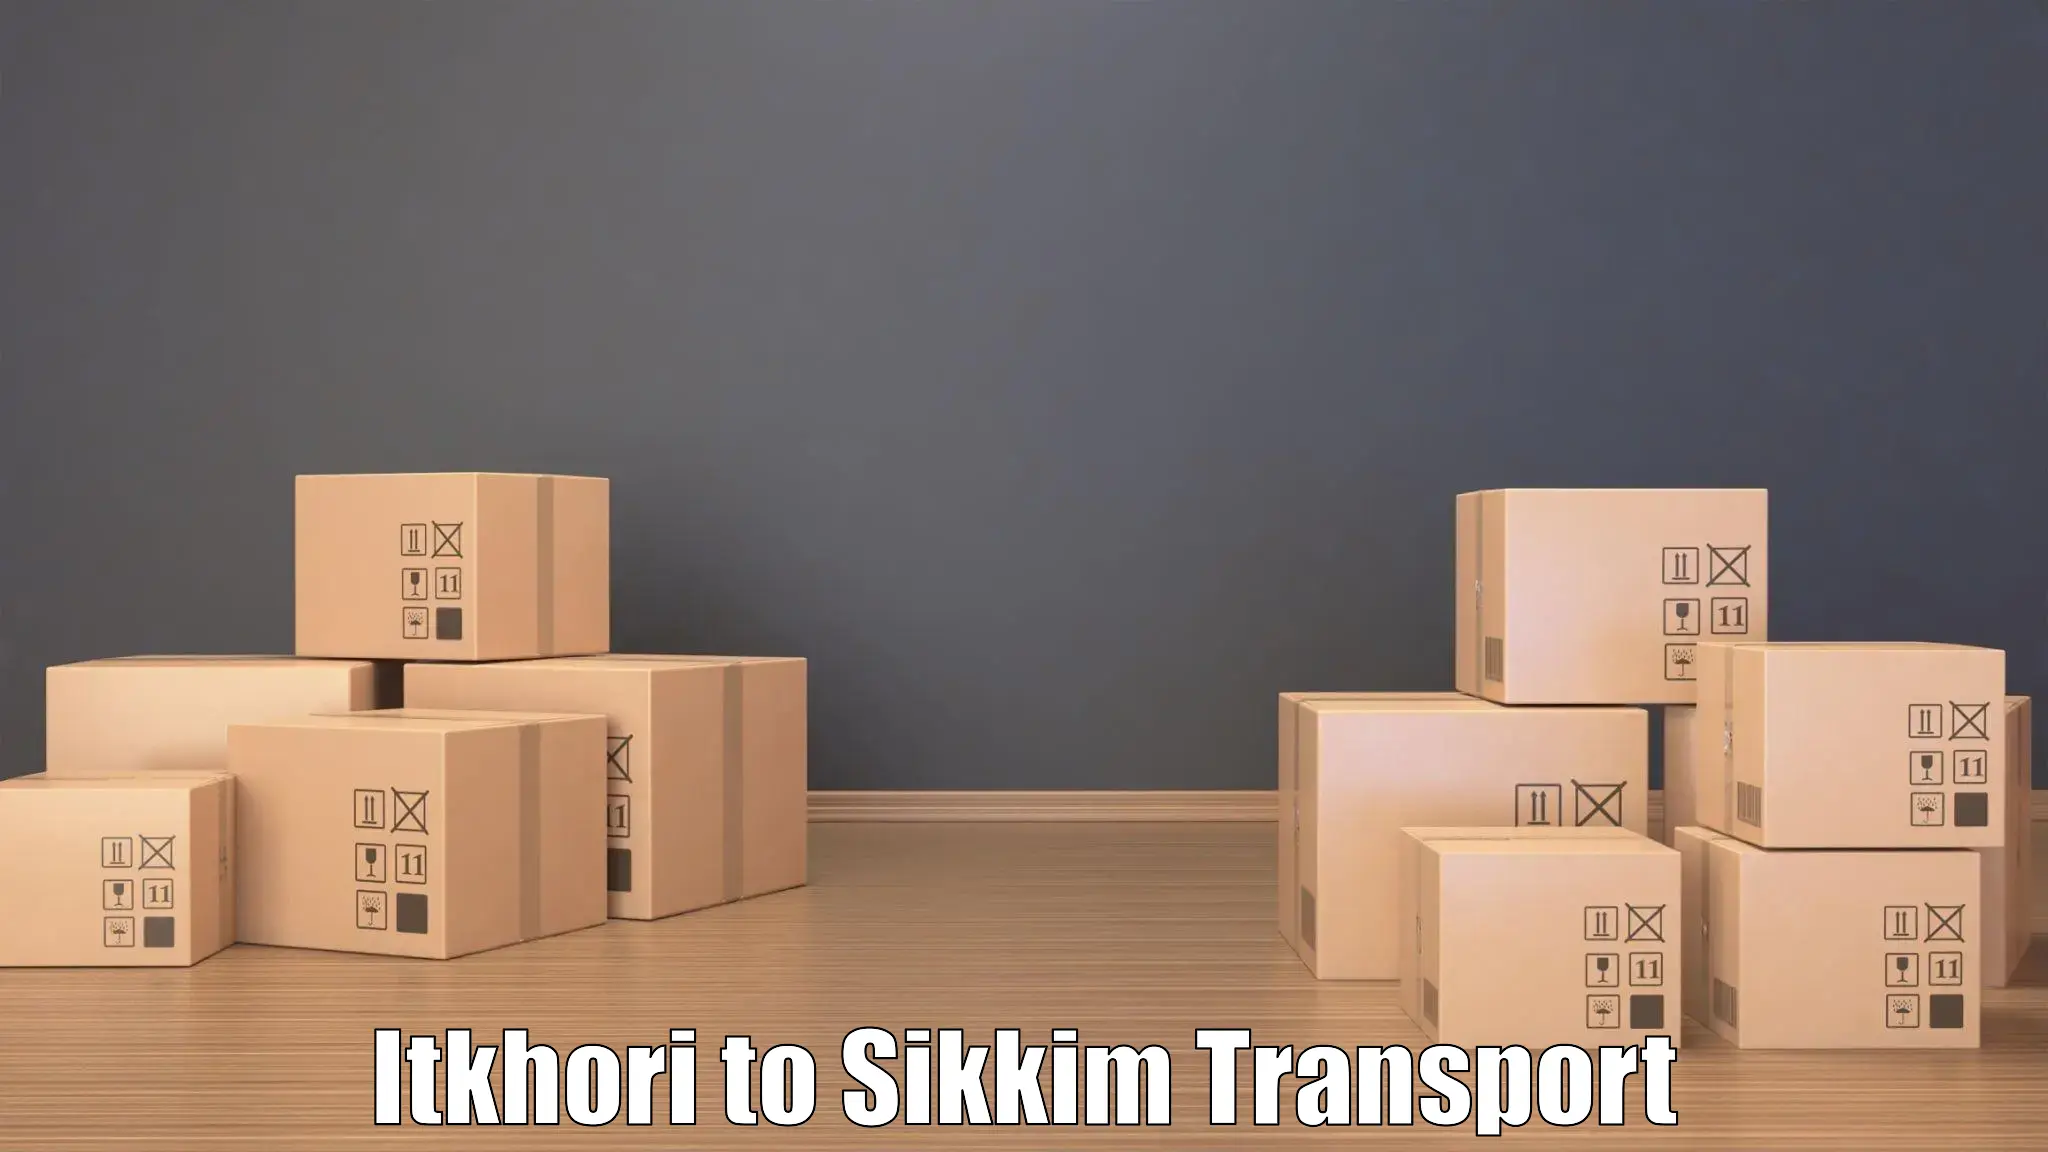 Shipping partner Itkhori to East Sikkim